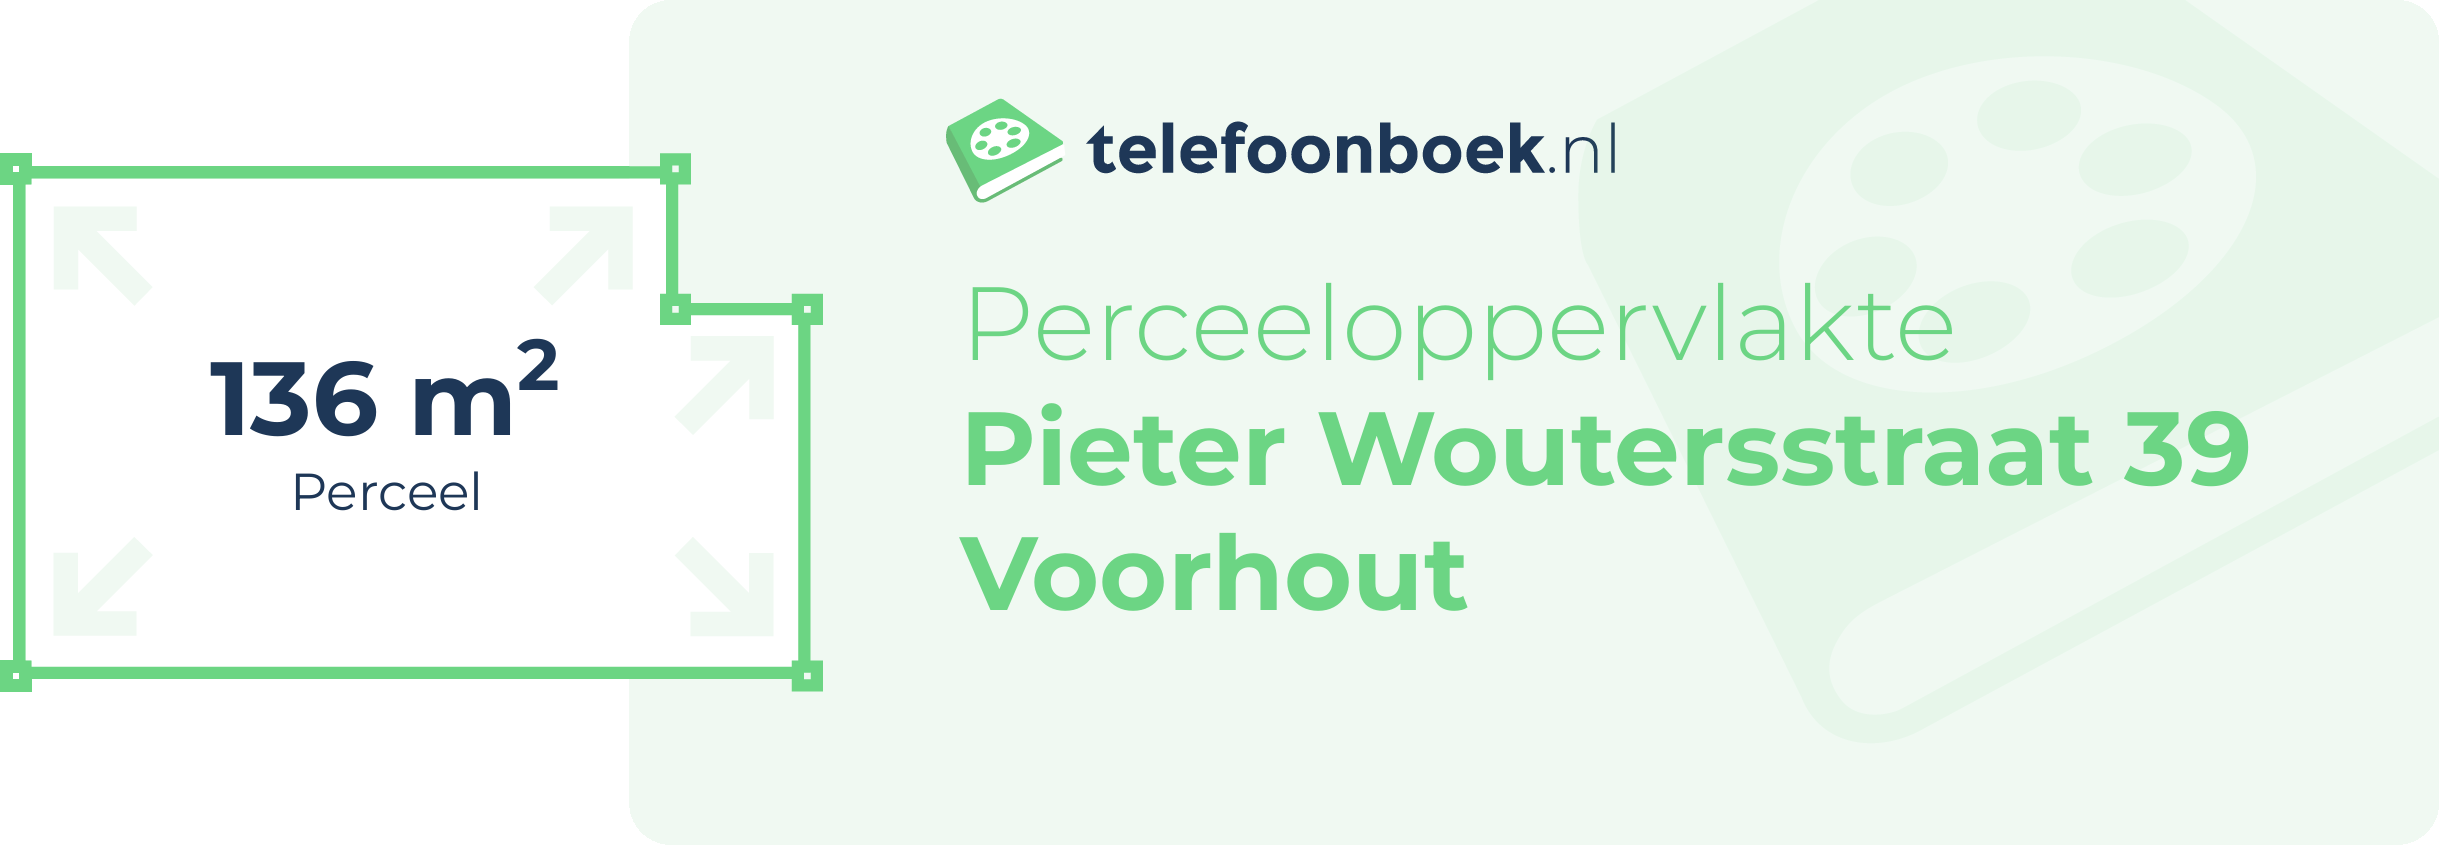 Perceeloppervlakte Pieter Woutersstraat 39 Voorhout